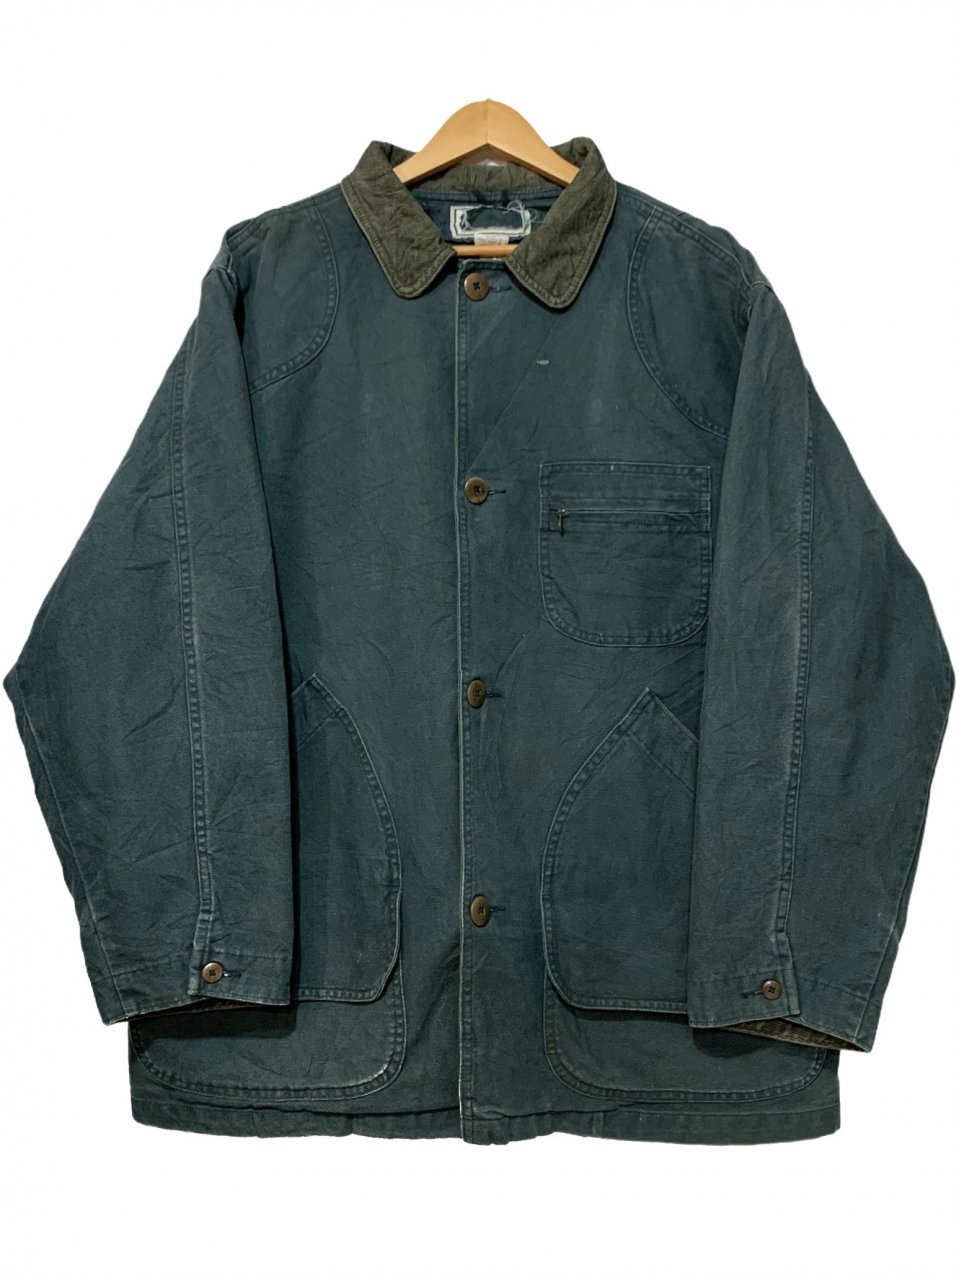 90s L.L.Bean Cotton Hunting Jacket with PRIMALOFT Liner 深緑 L 